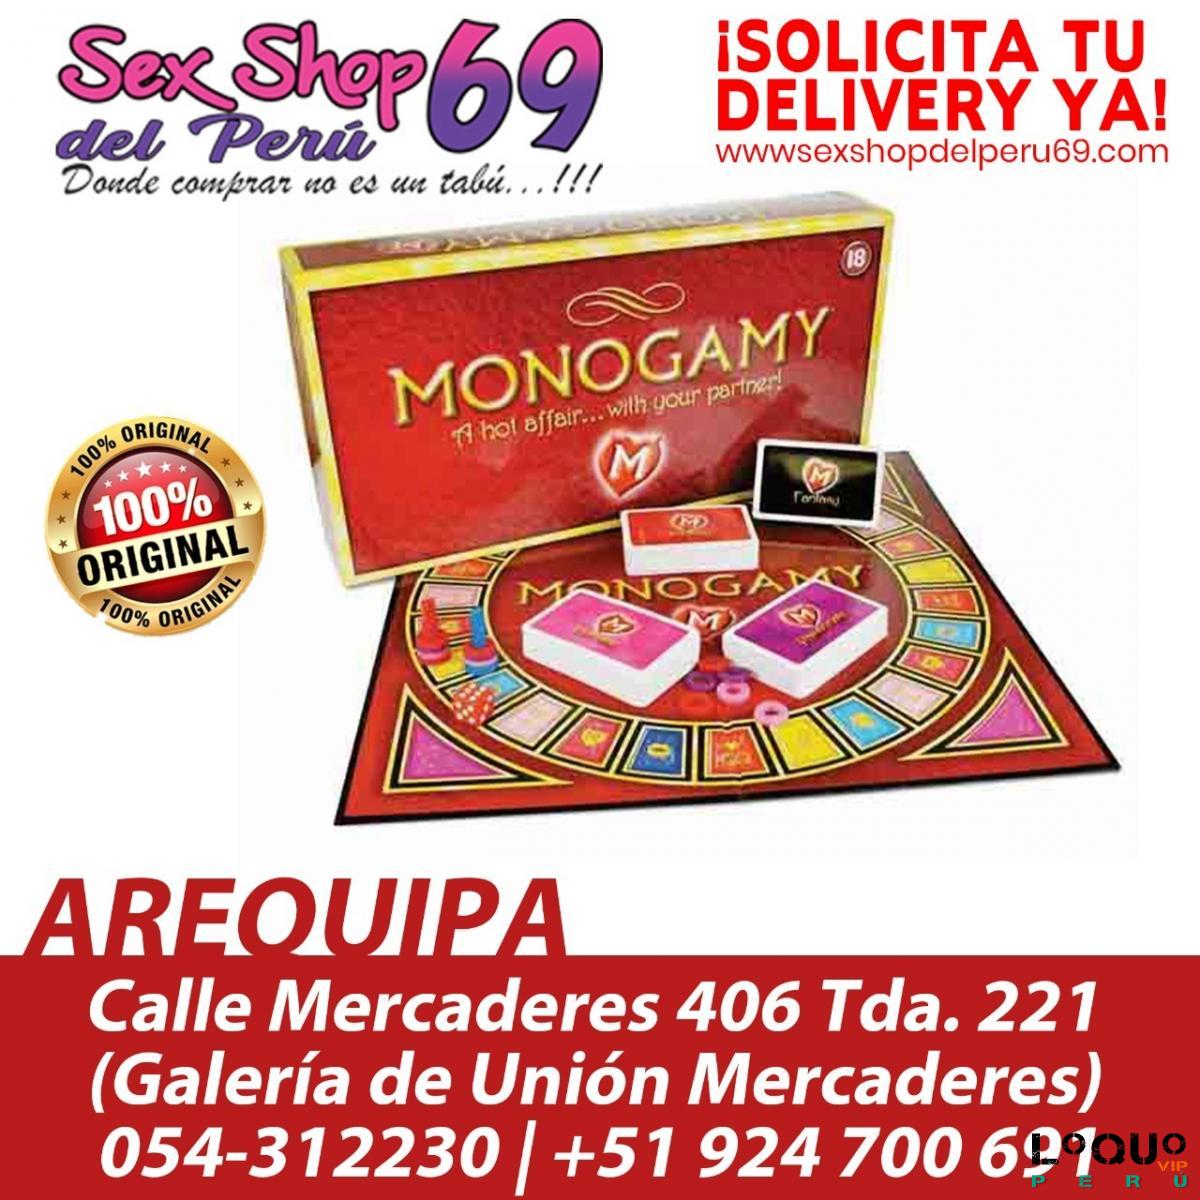 Sex Shop Arequipa: monogamy +++ juego de placer